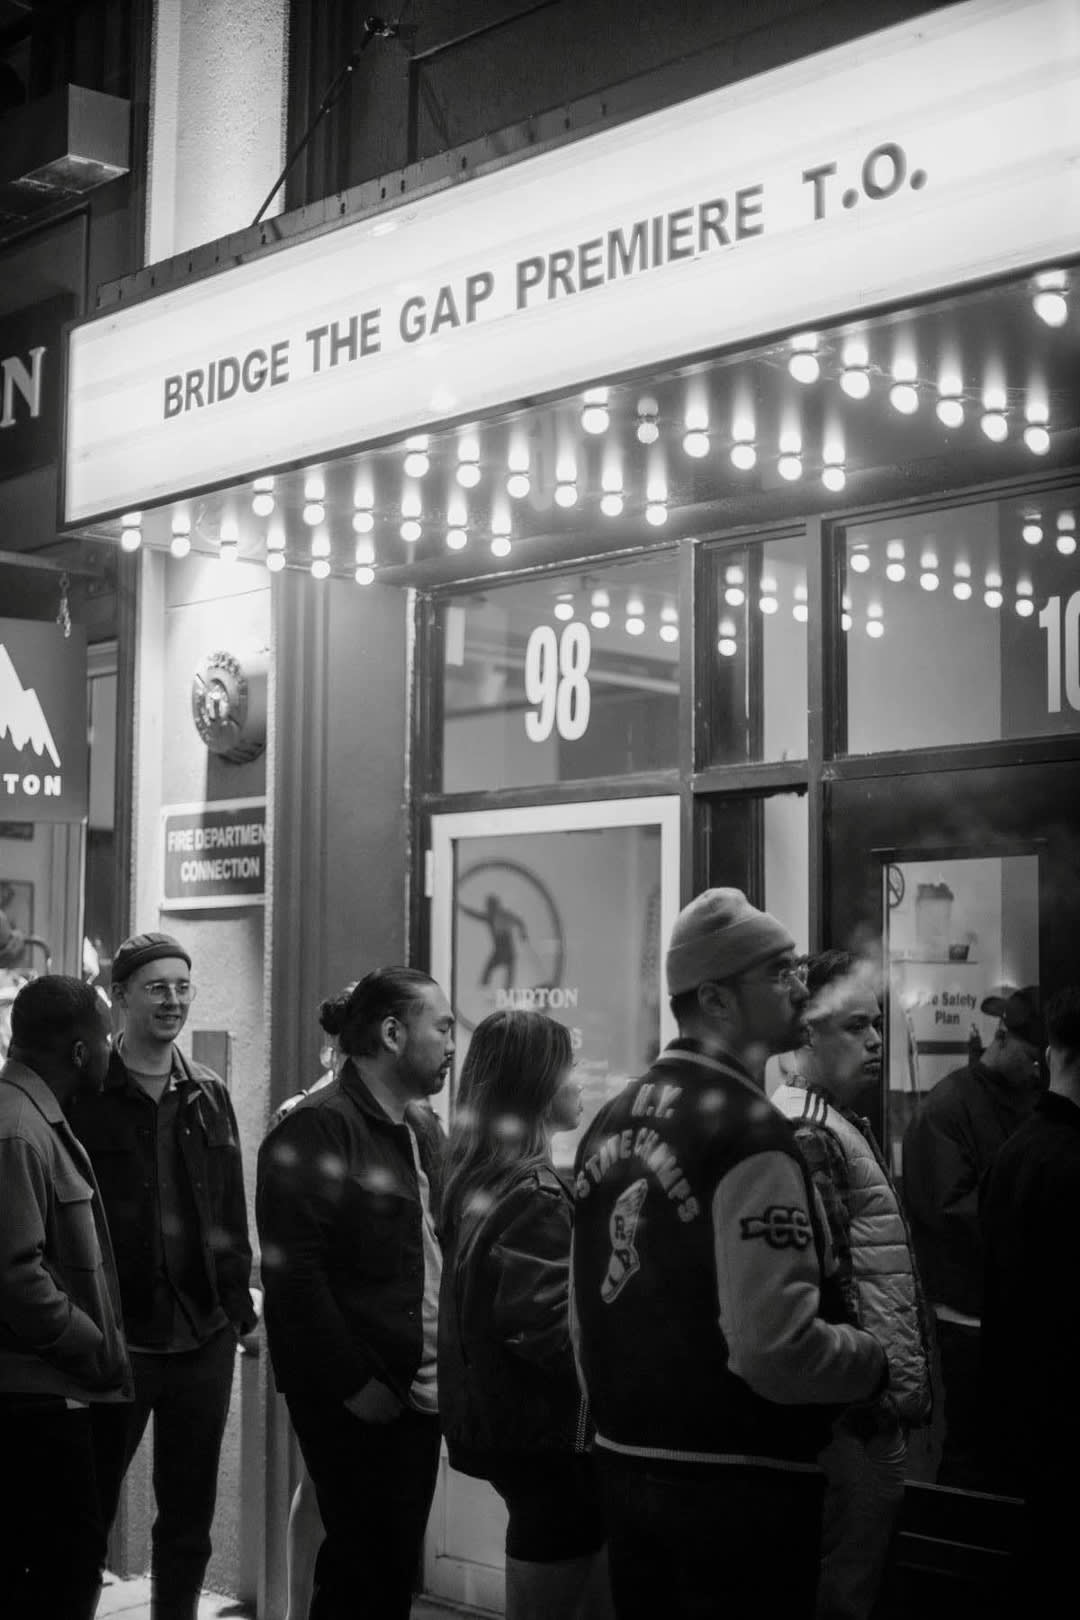 The crowd at the &#x27;Bridge the Gap&#x27; premiere in Toronto